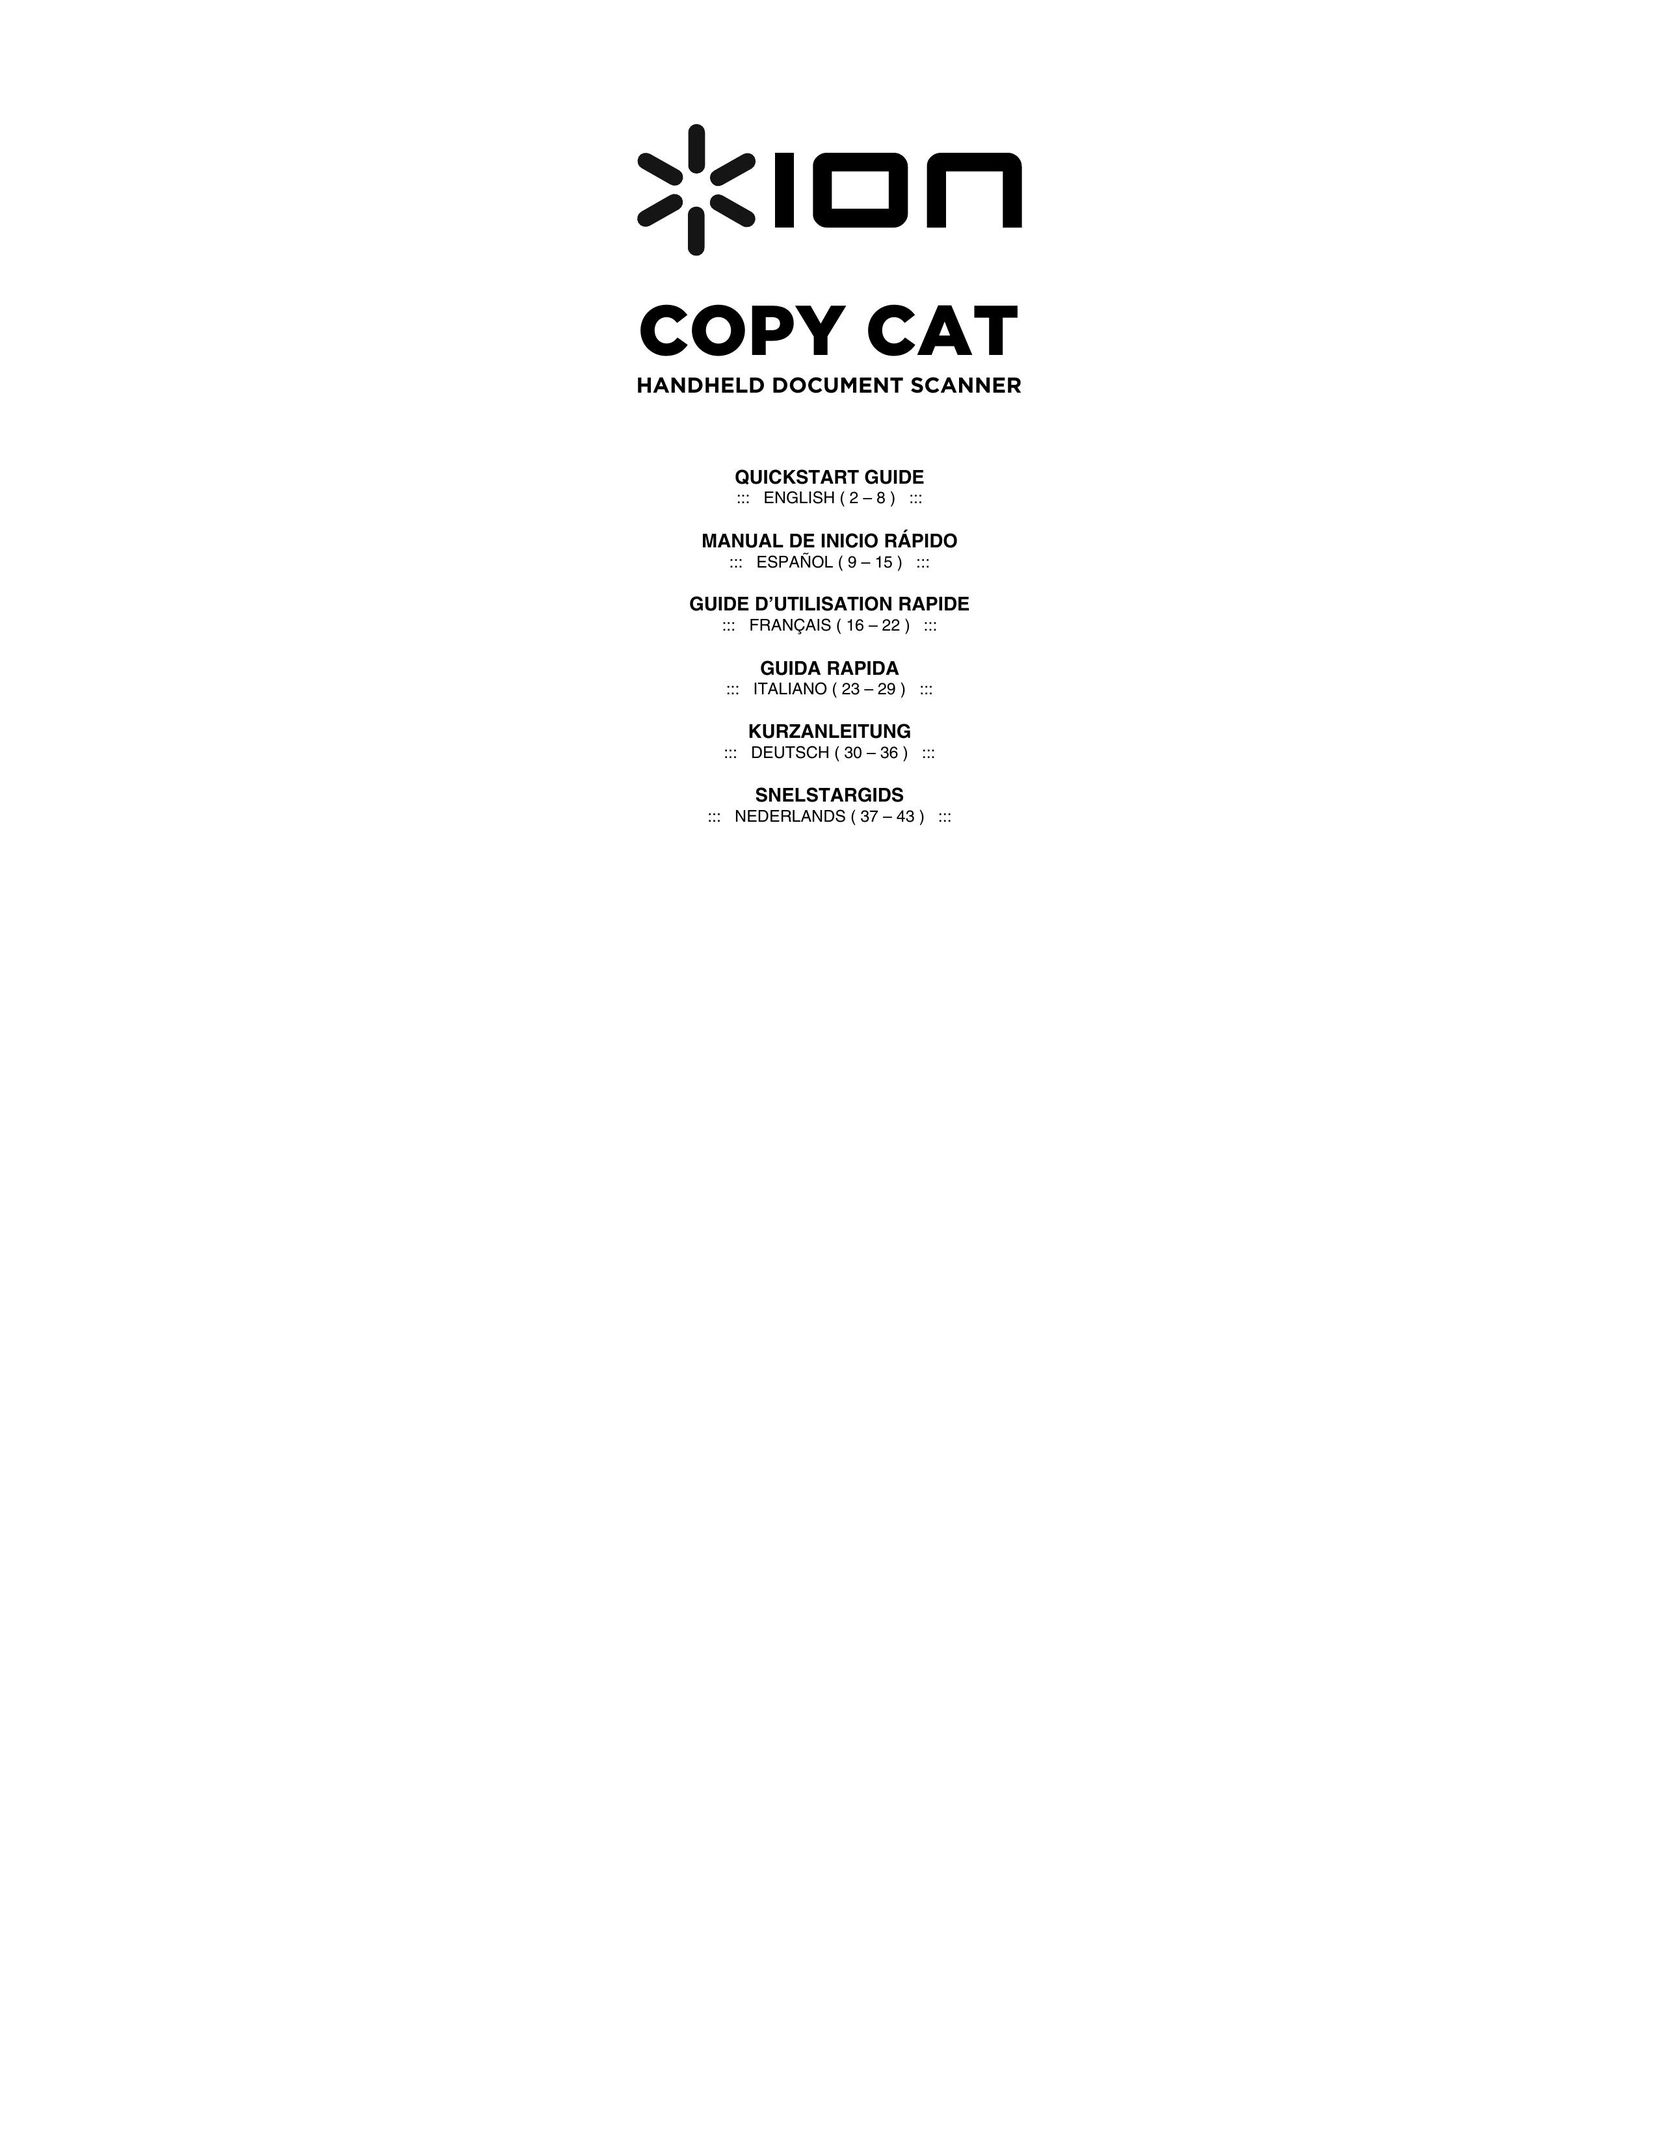 ION COPY CAT Scanner User Manual